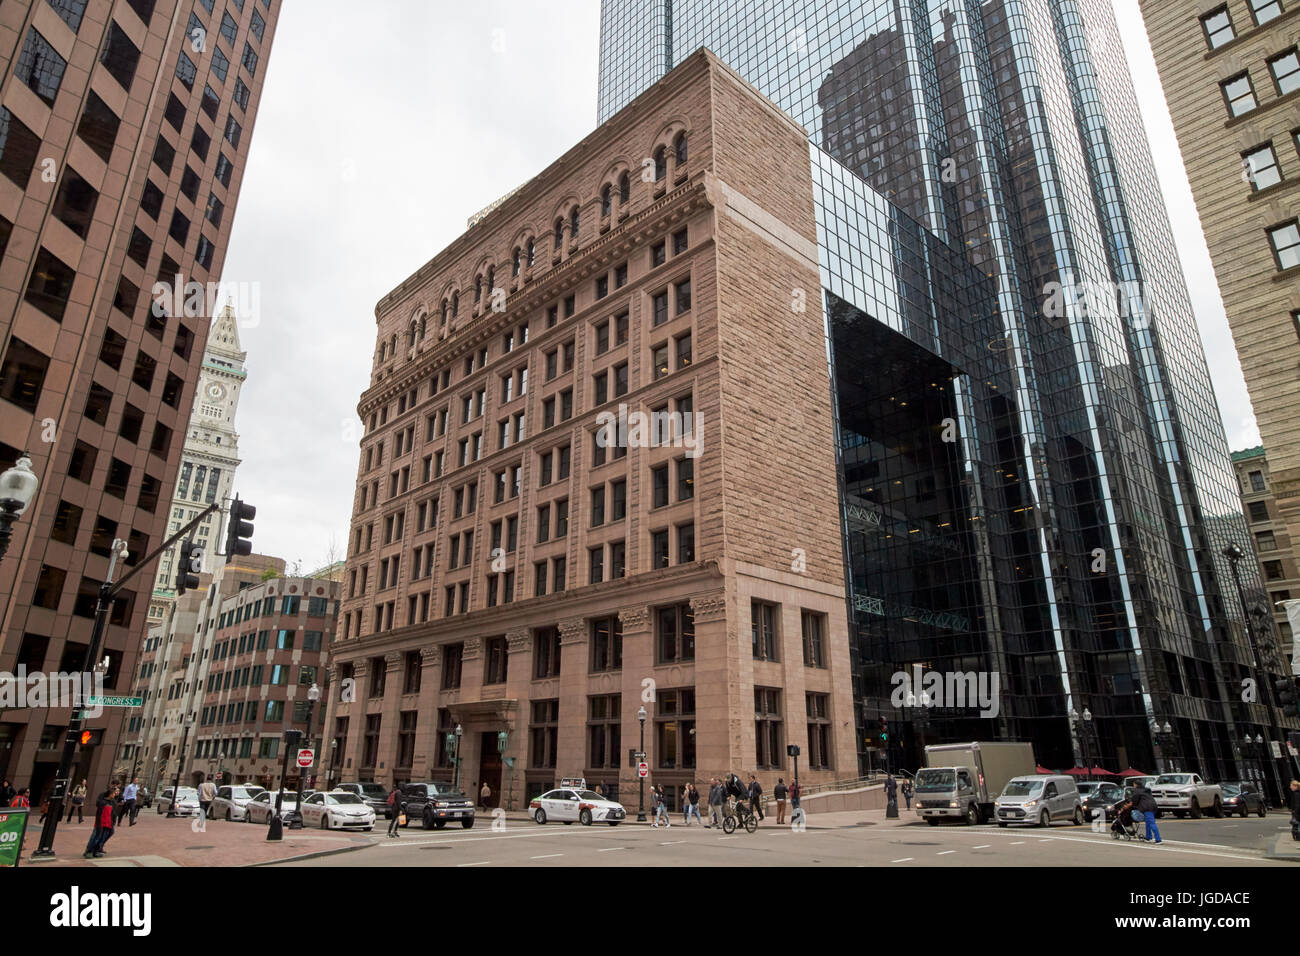 former boston stock exchange building facade to exchange place Boston USA Stock Photo